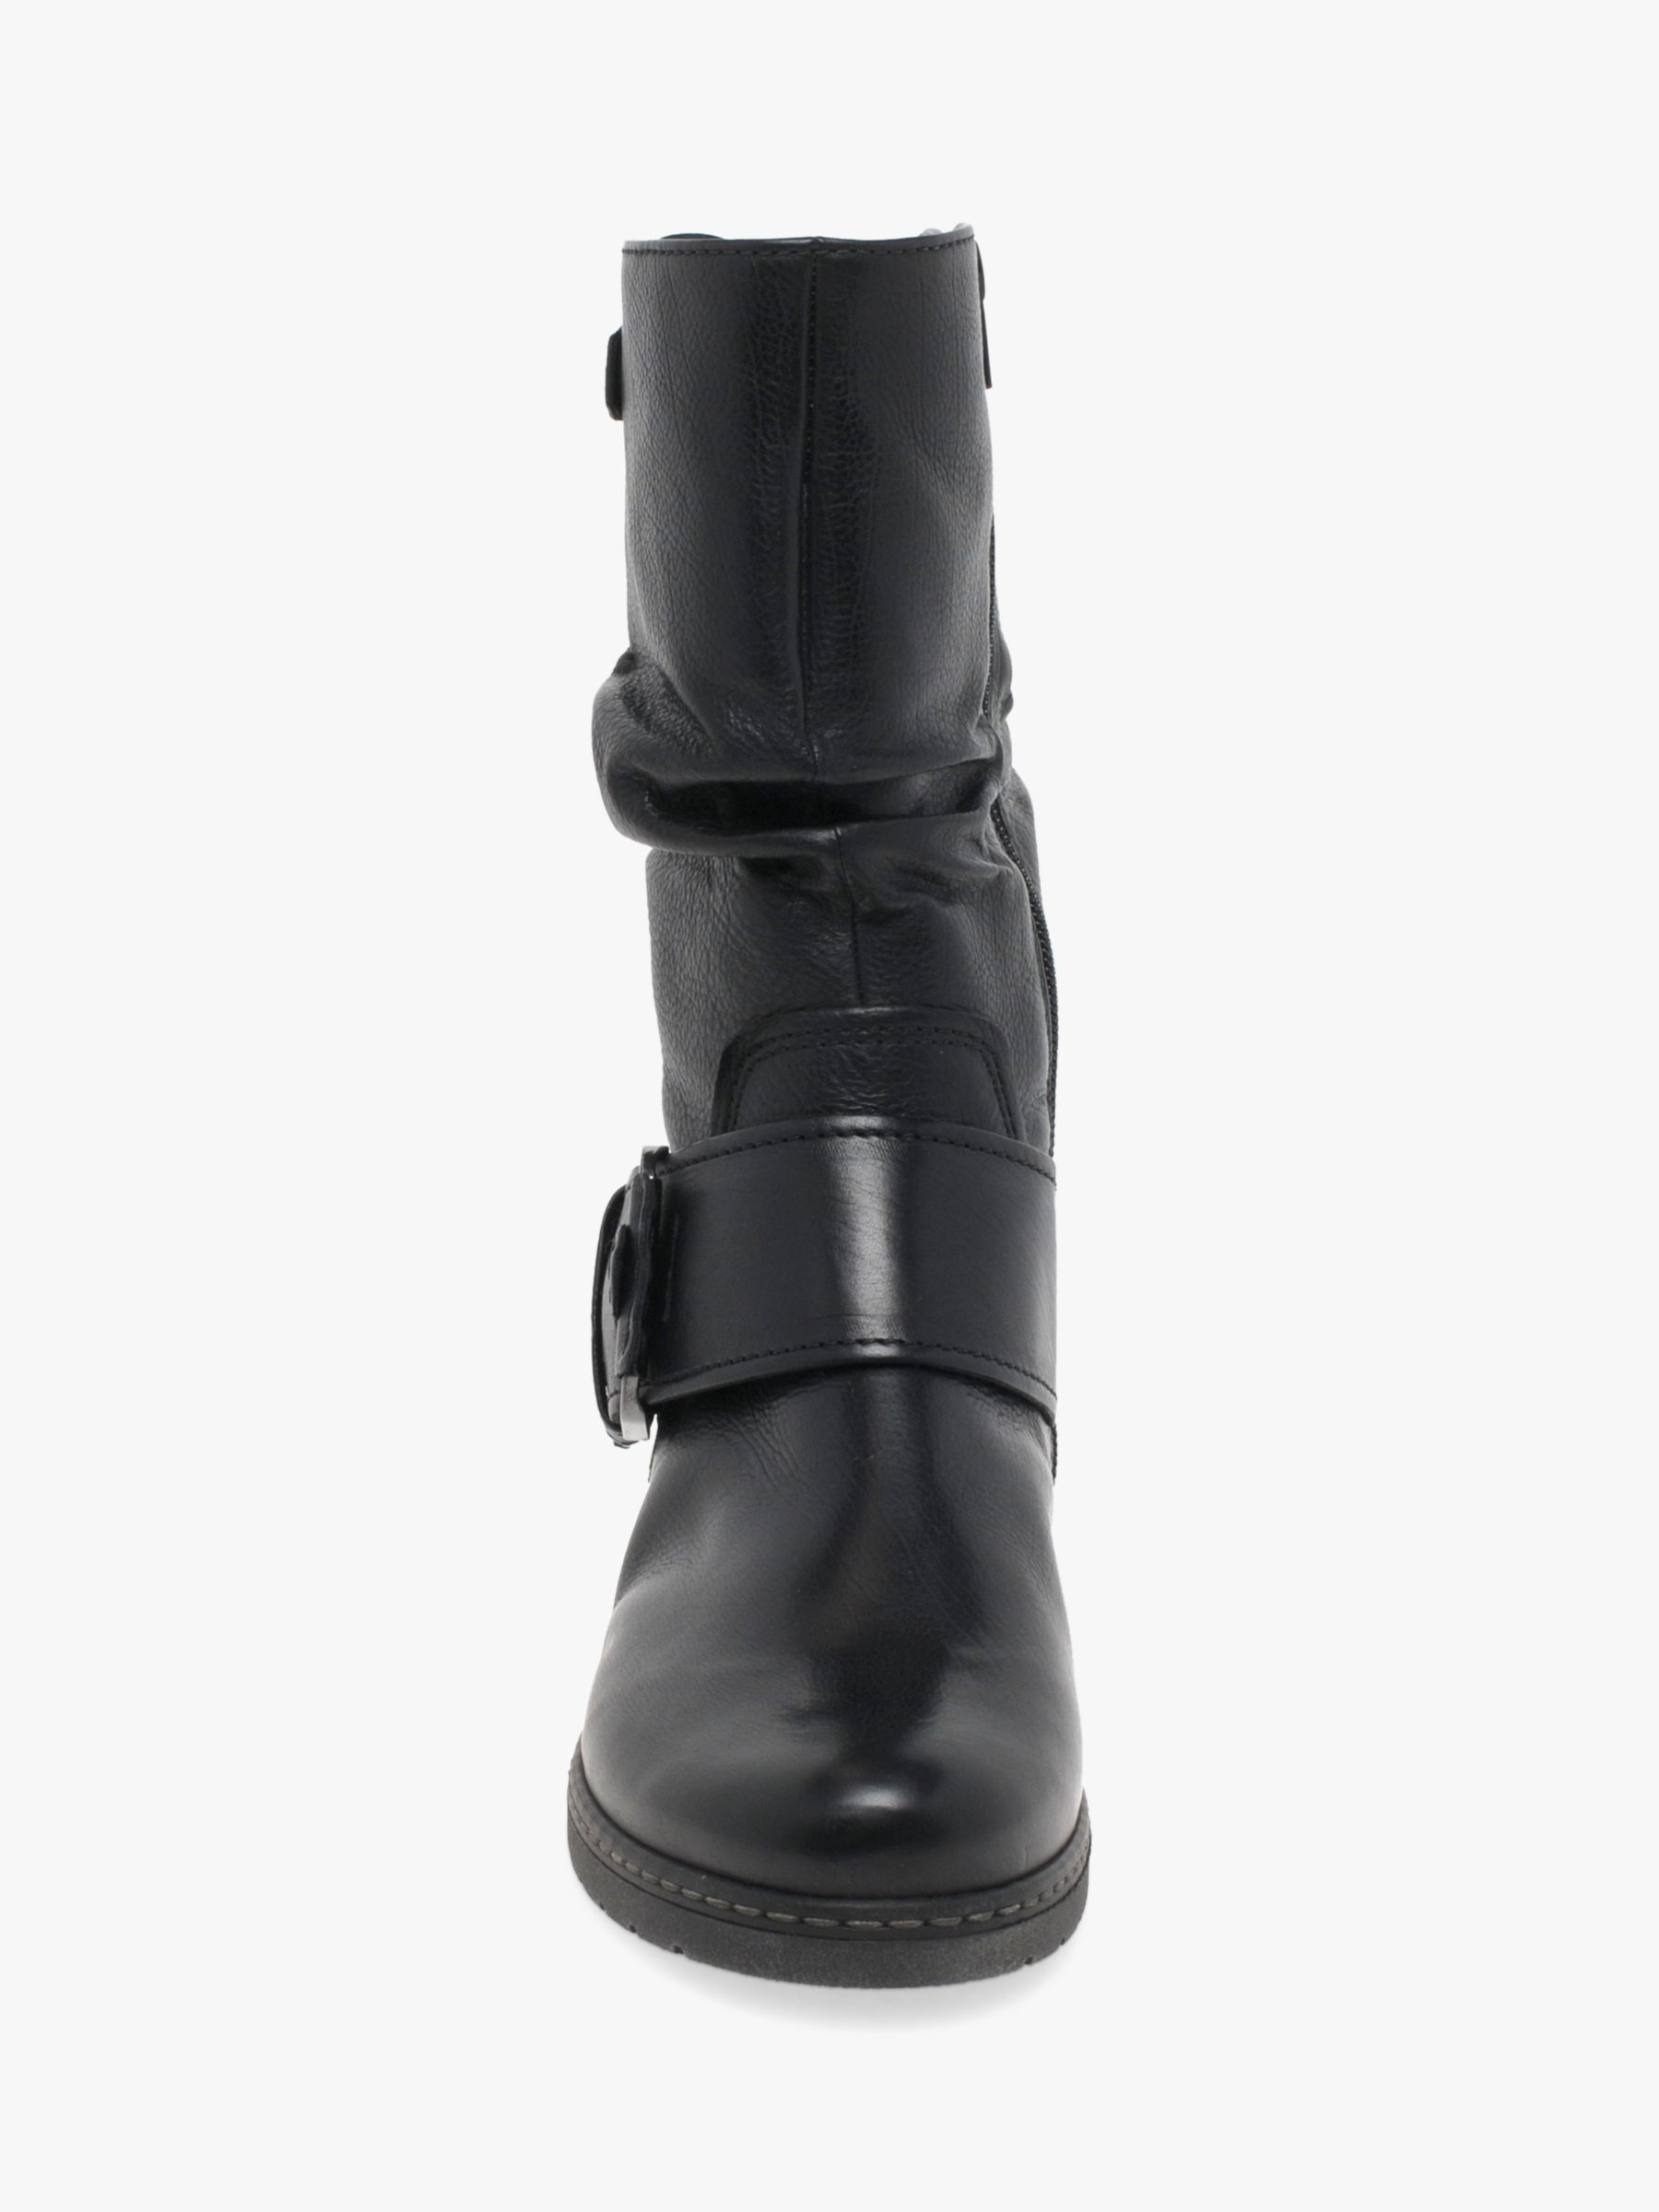 gabor calf length boots